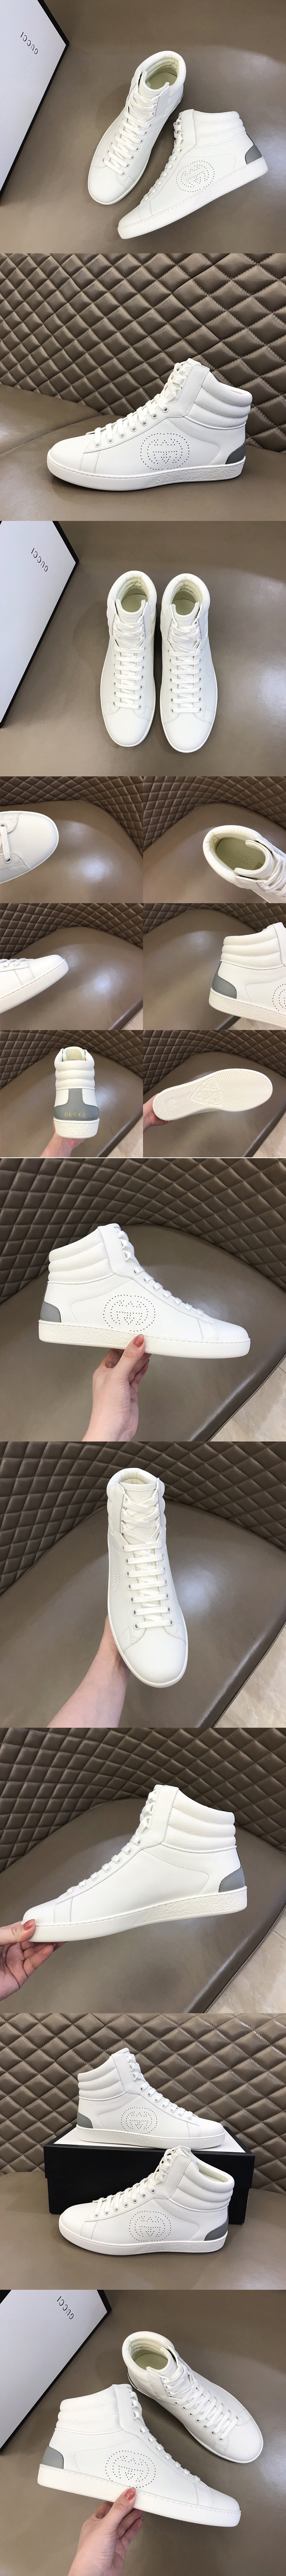 Replica Gucci 625672 Men's high-top Ace sneaker in White leather